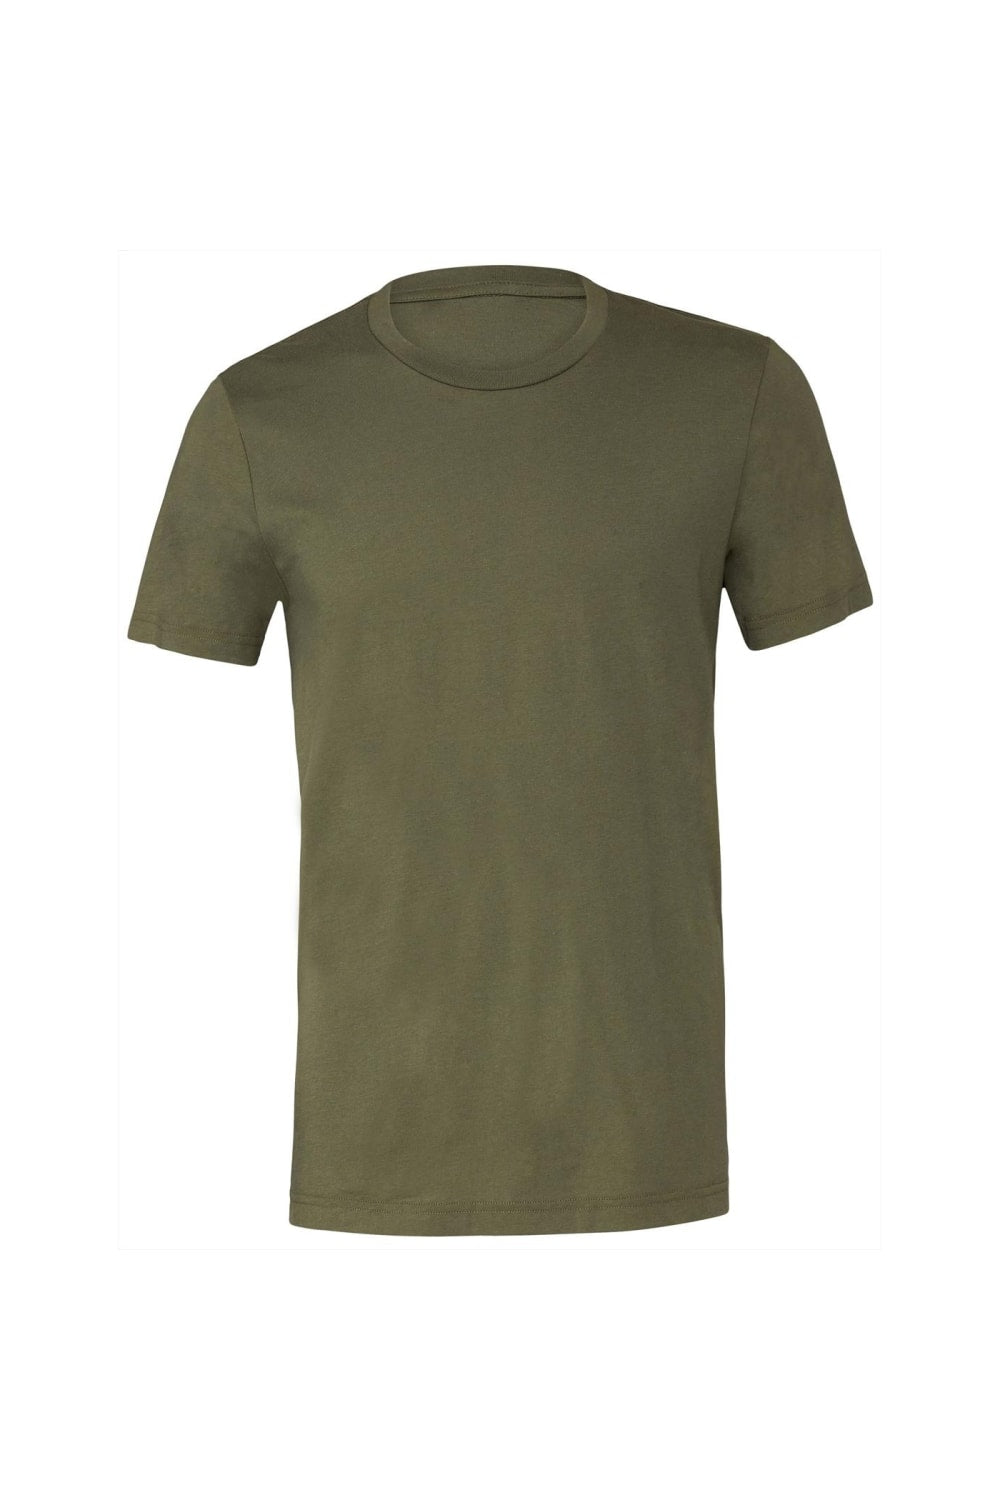 Bella + Canvas Unisex Jersey Crew Neck T-Shirt (Military Green)